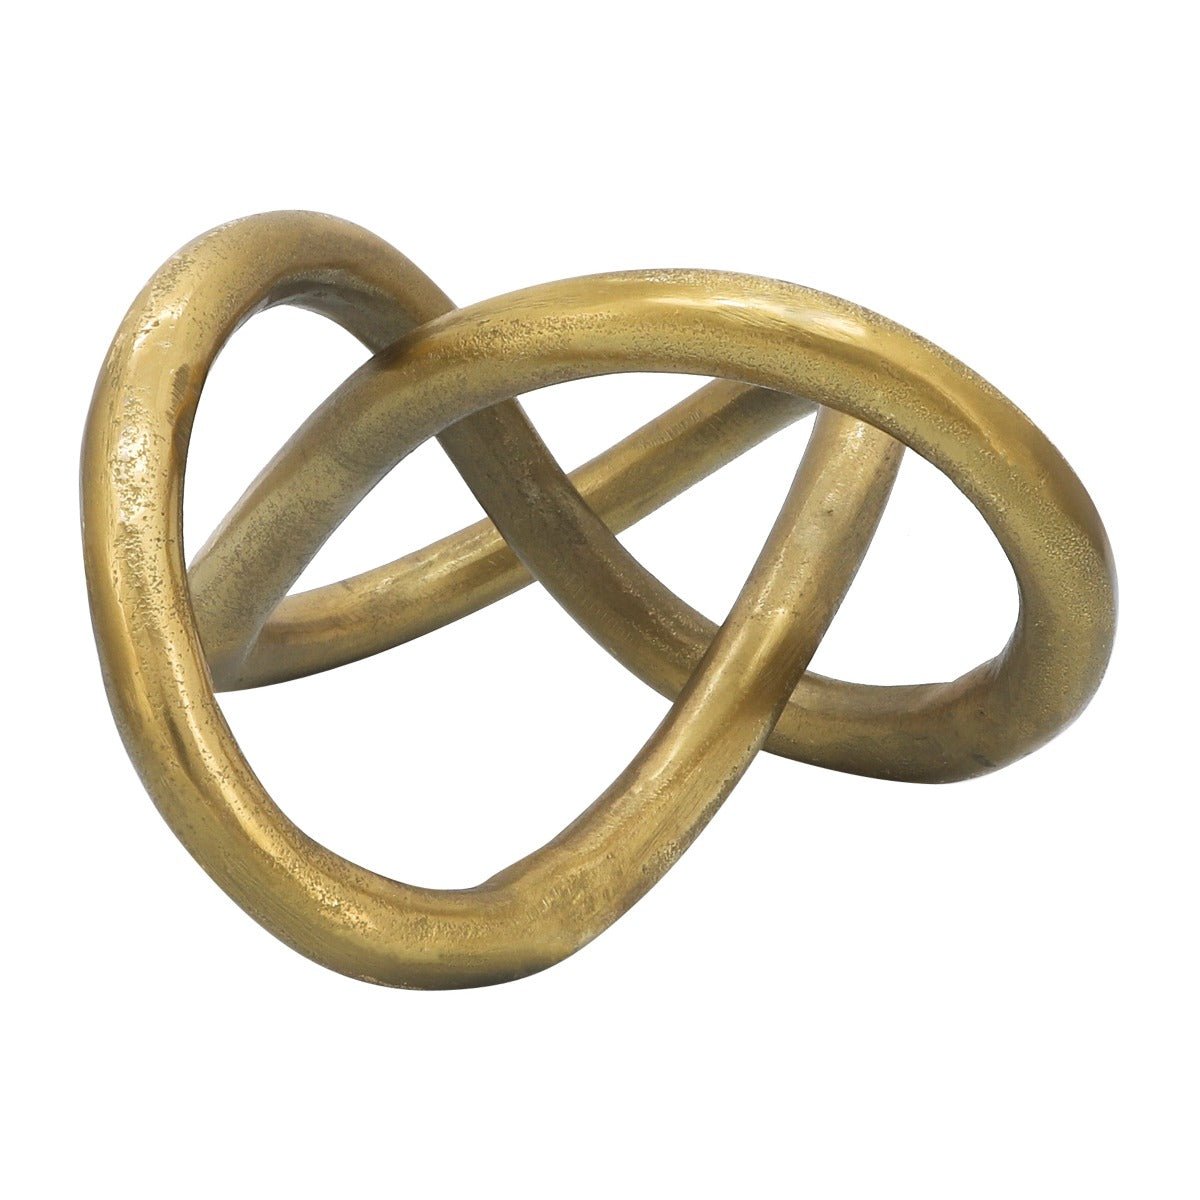 Sagebrook Home Gold Metal Knot Figurine, 9" - lily & onyx